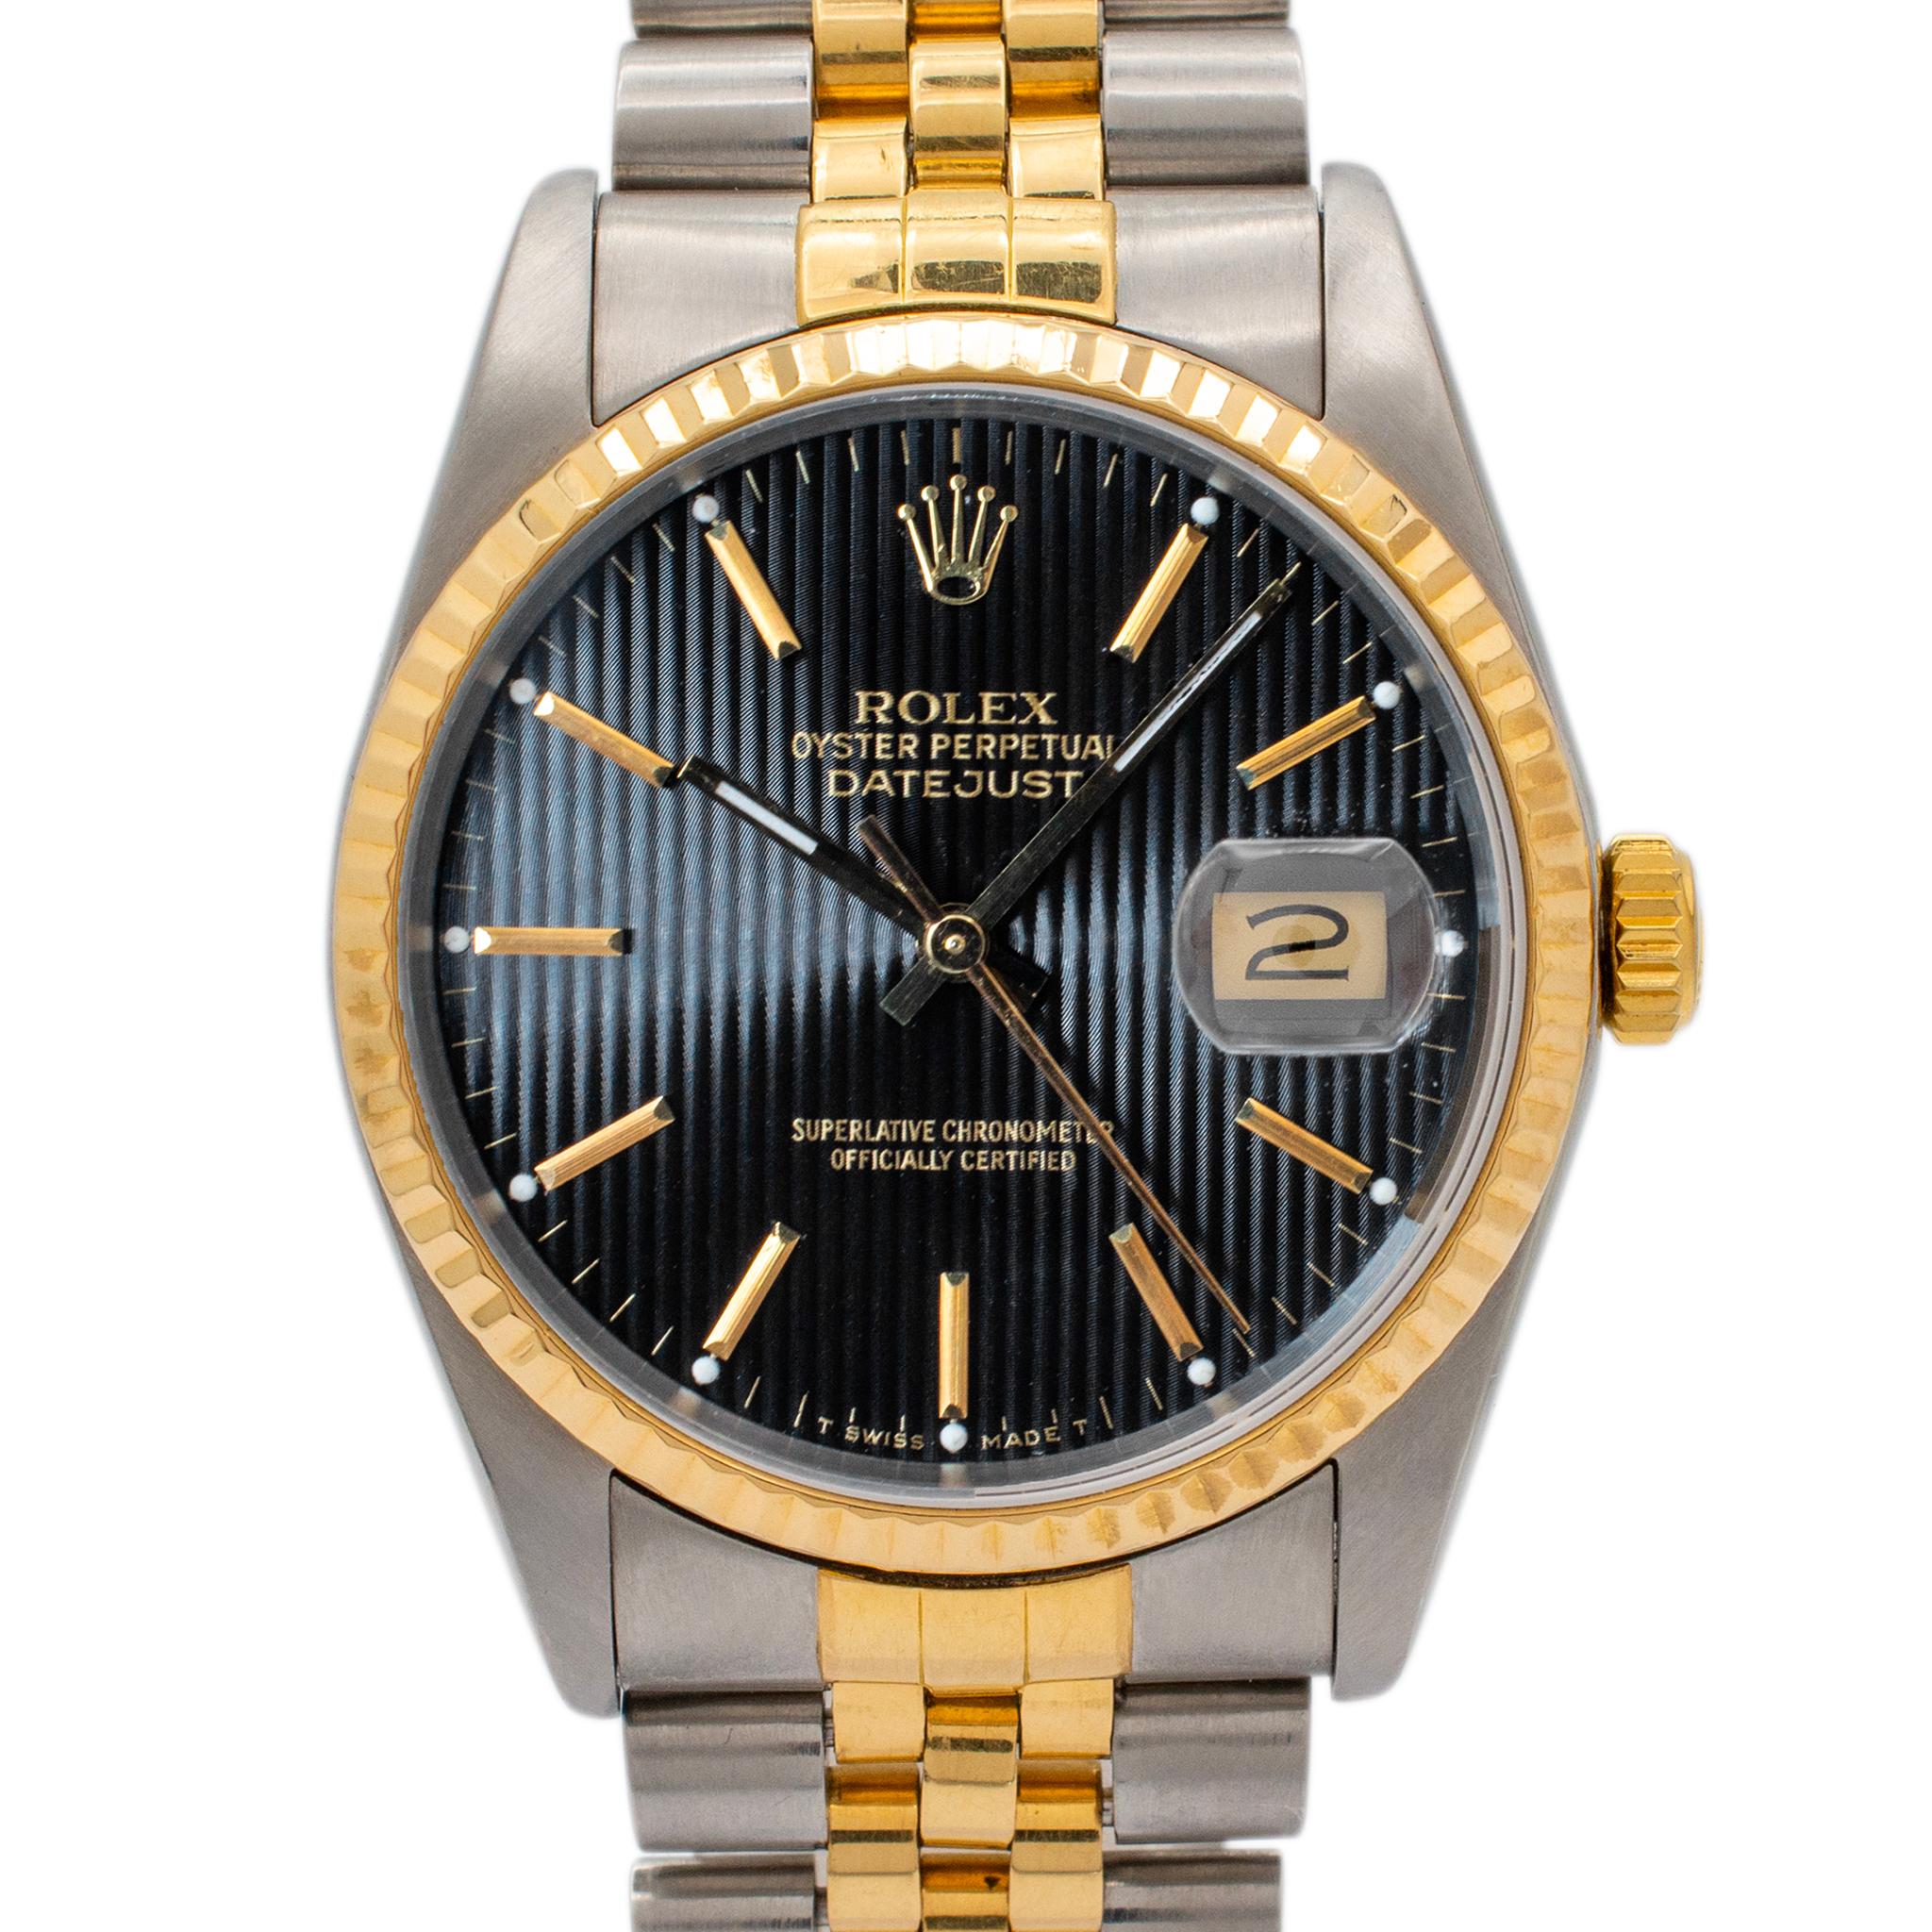 Brand: Rolex

Gender: Unisex

Metal Type: Stainless Steel & 18K Yellow Gold

Diameter: 36.00 mm

Weight: 101.08 grams

Stainless steel, ROLEX Swiss-made watch. The 